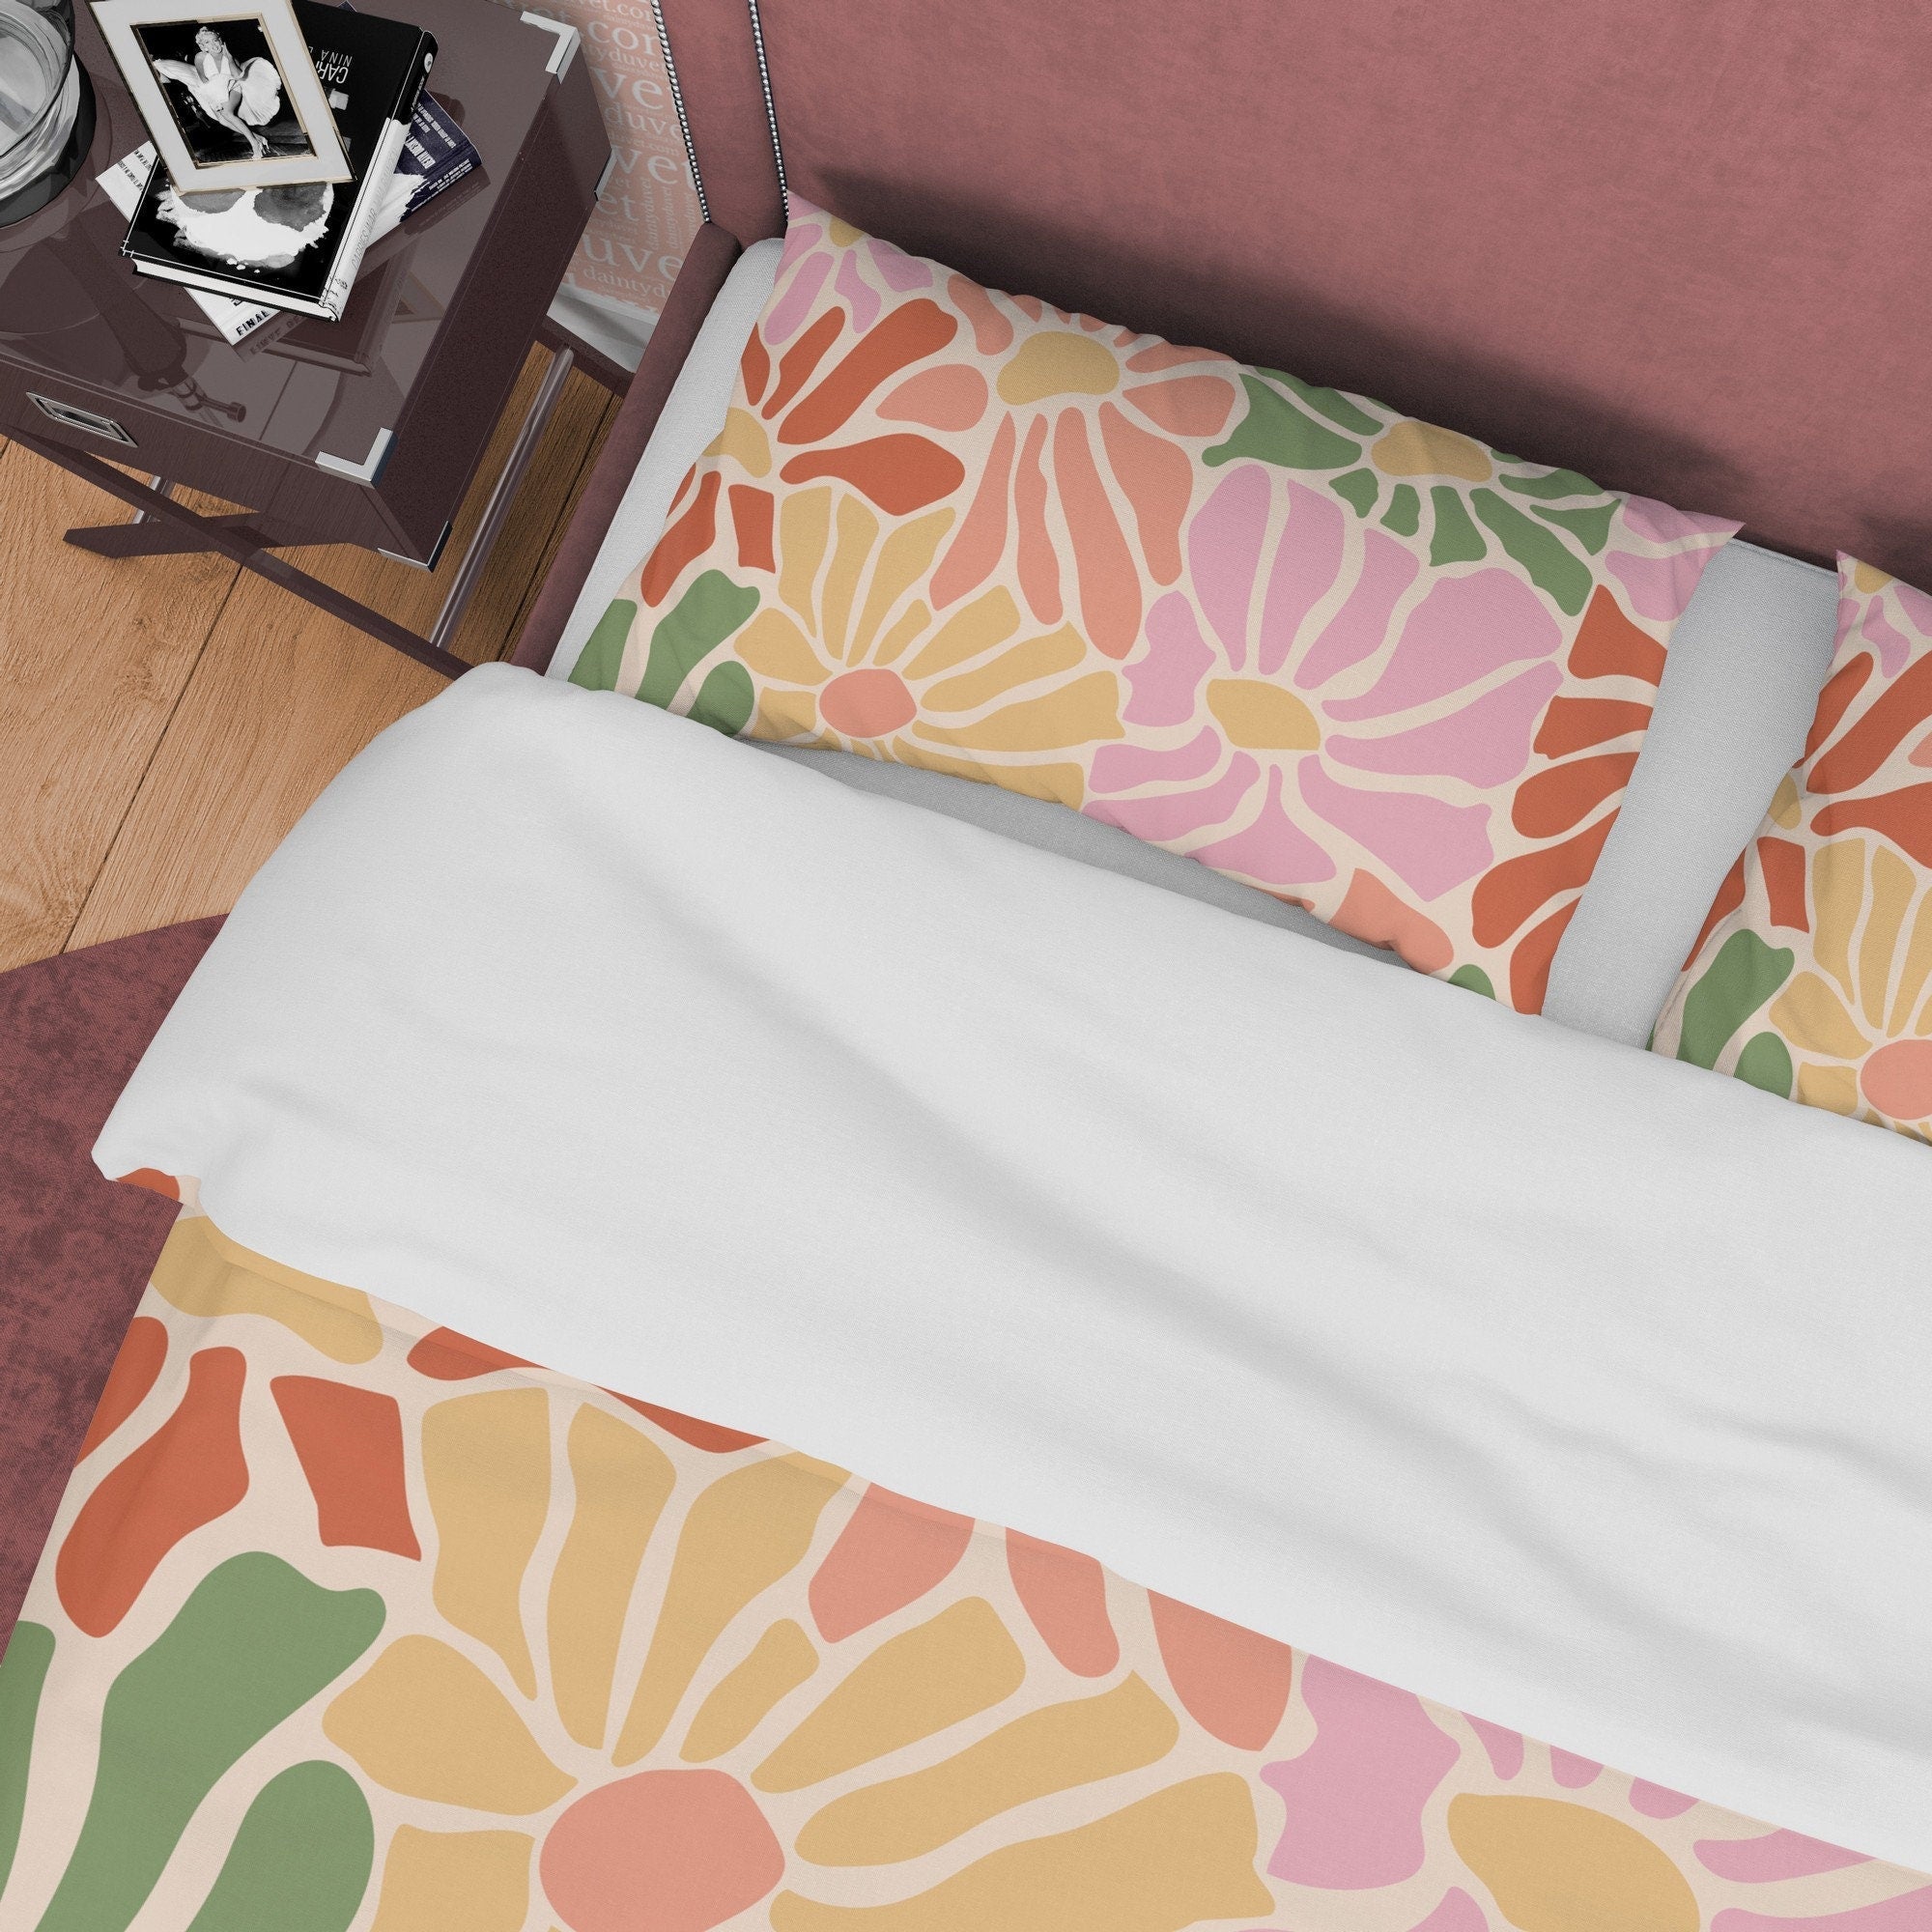 Colorful Flower Boho Bedding Beige Duvet Cover Bohemian Bedroom Set, Floral Quilt Cover, Aesthetic Bedspread, Bright Unique Blanket Cover